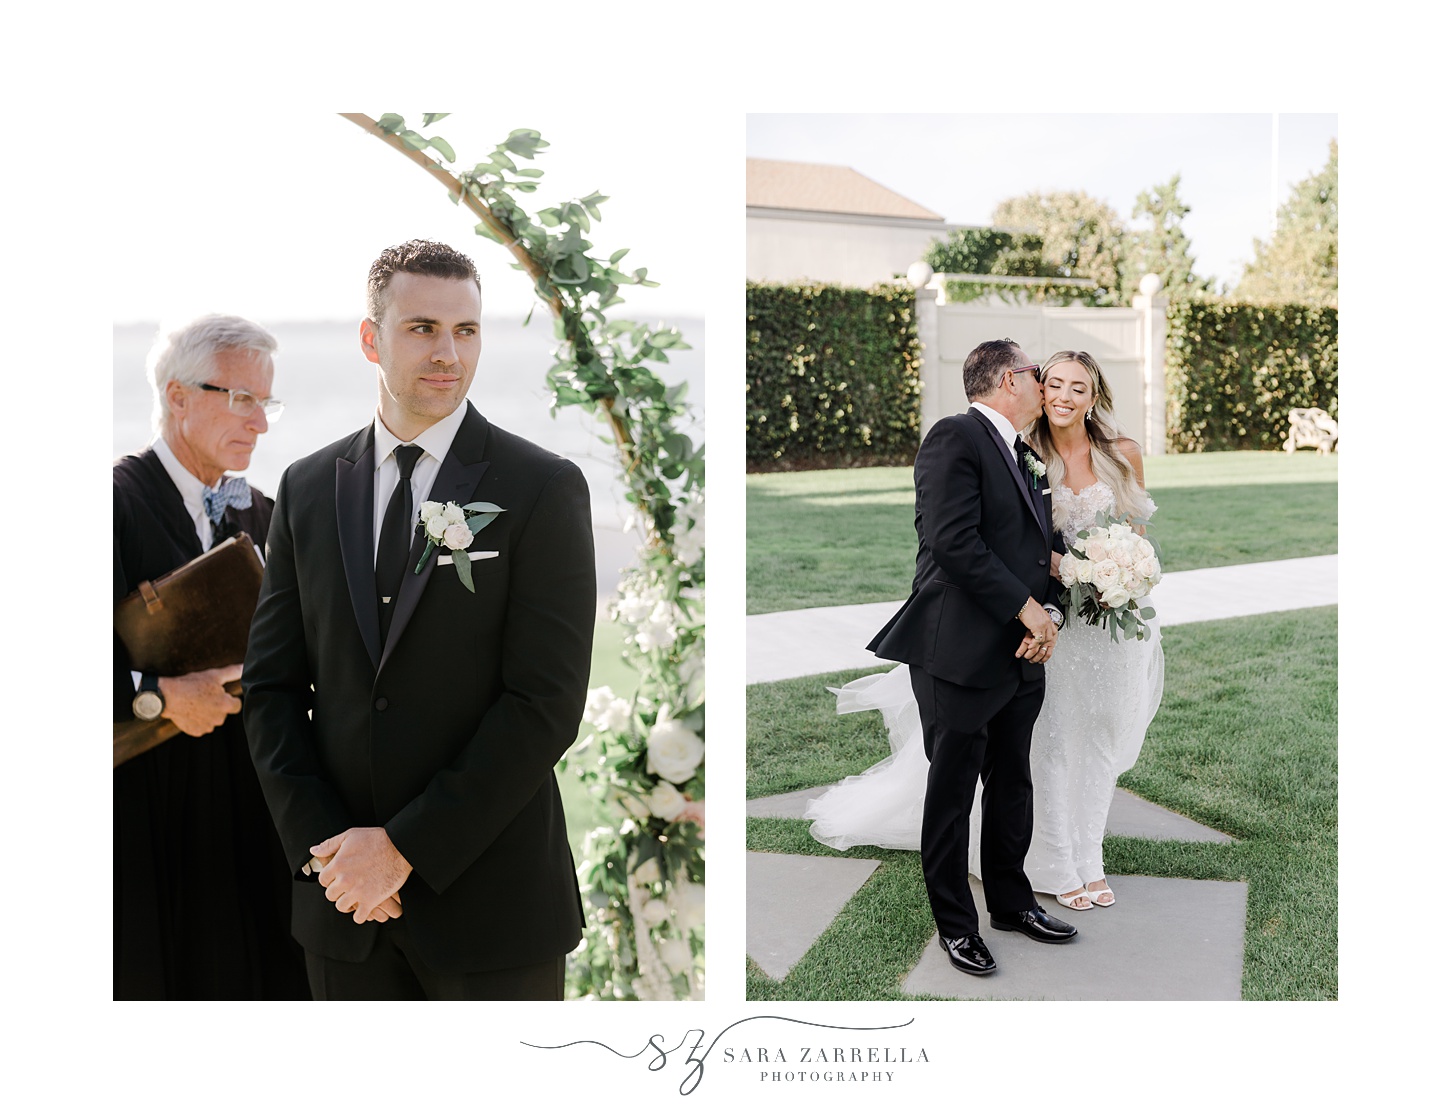 father reaches to kiss bride's cheek before walking down aisle 